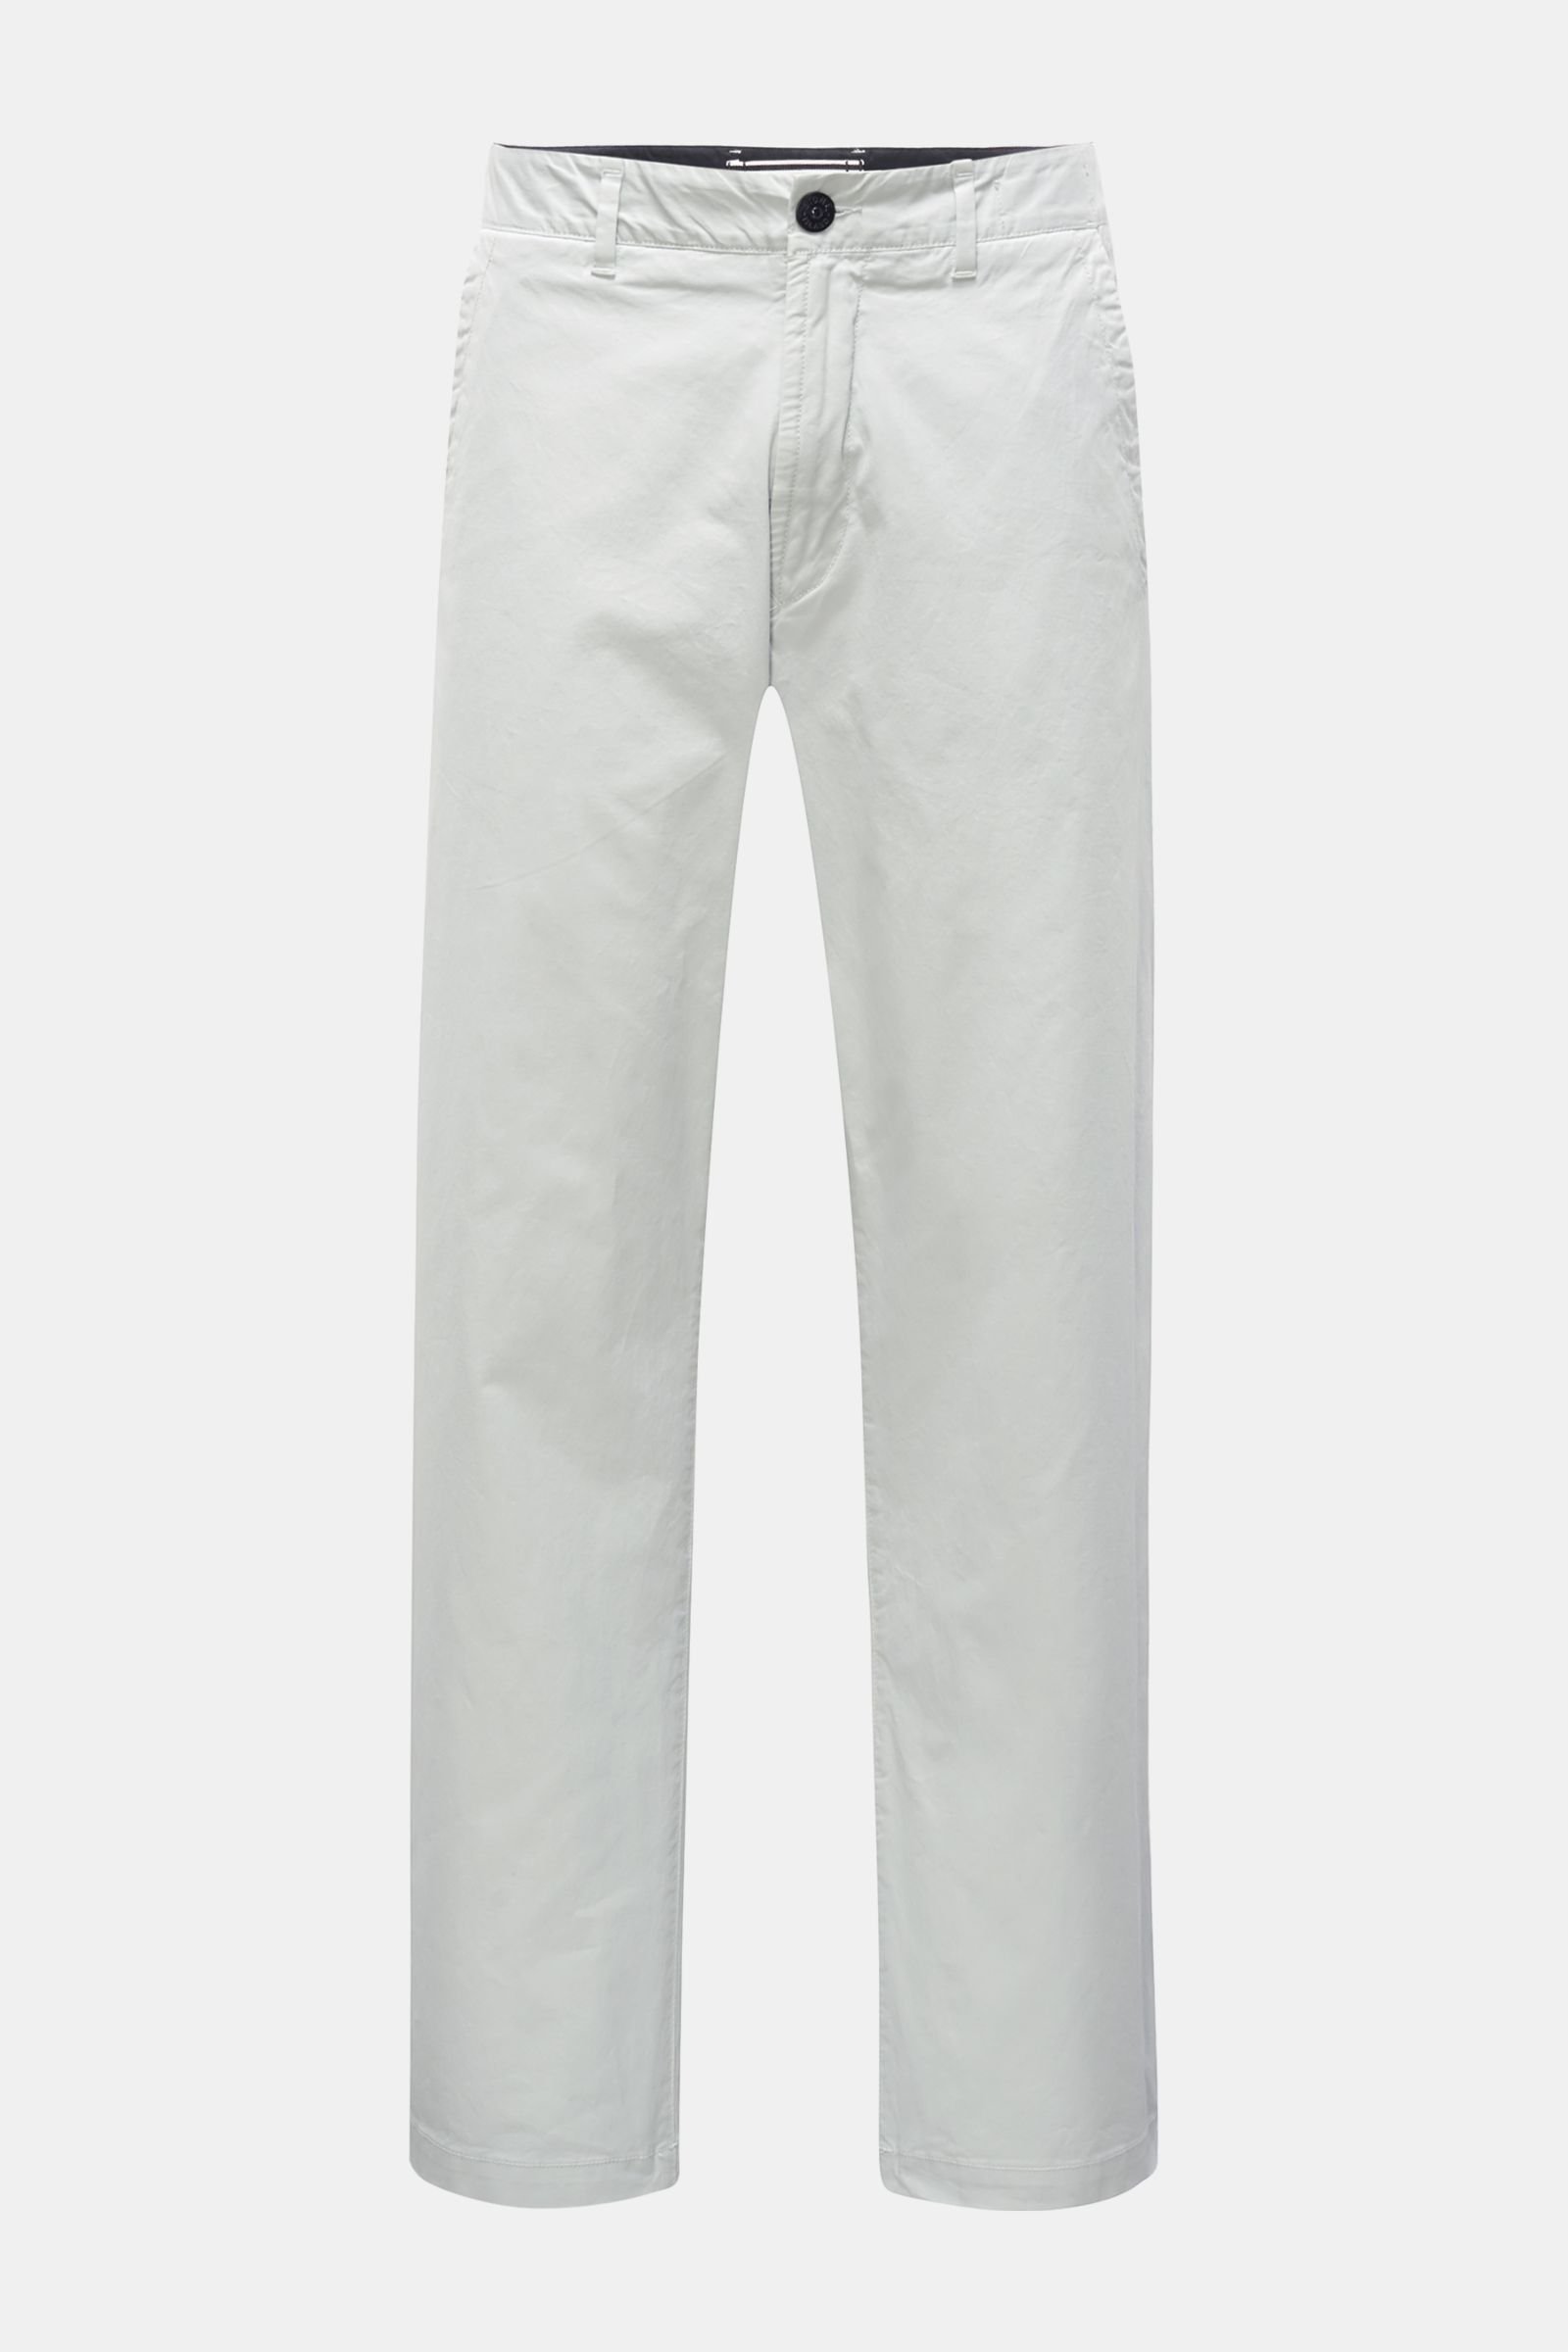 Cotton trousers, light grey